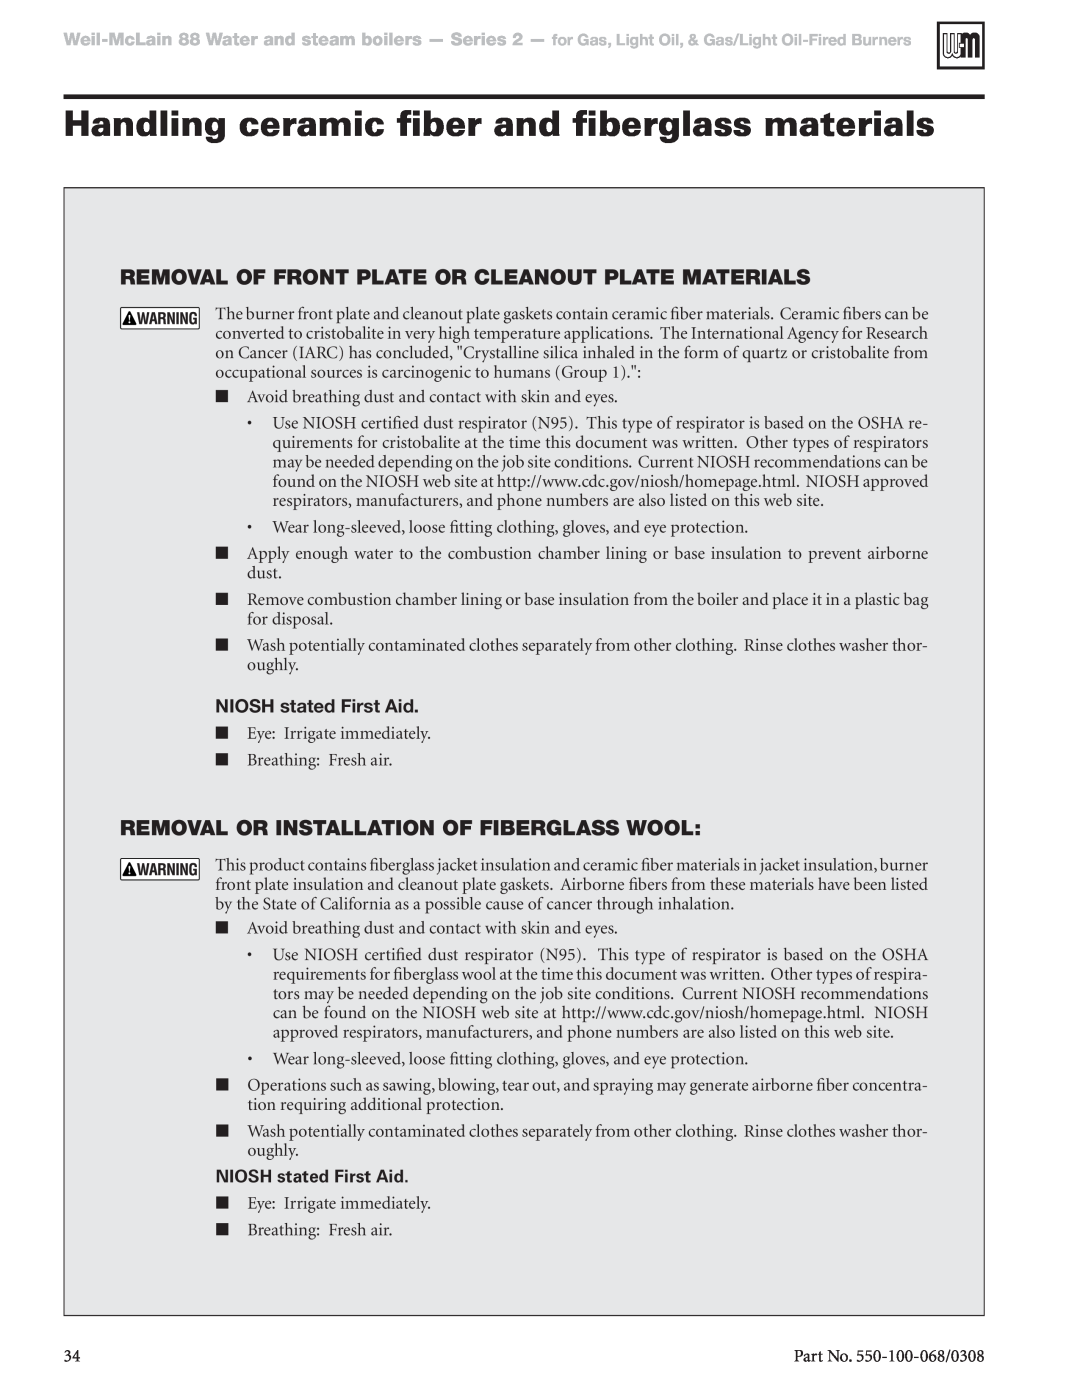 Weil-McLain 88 manual Handling ceramic fiber and fiberglass materials, Removal Or Installation Of Fiberglass Wool 